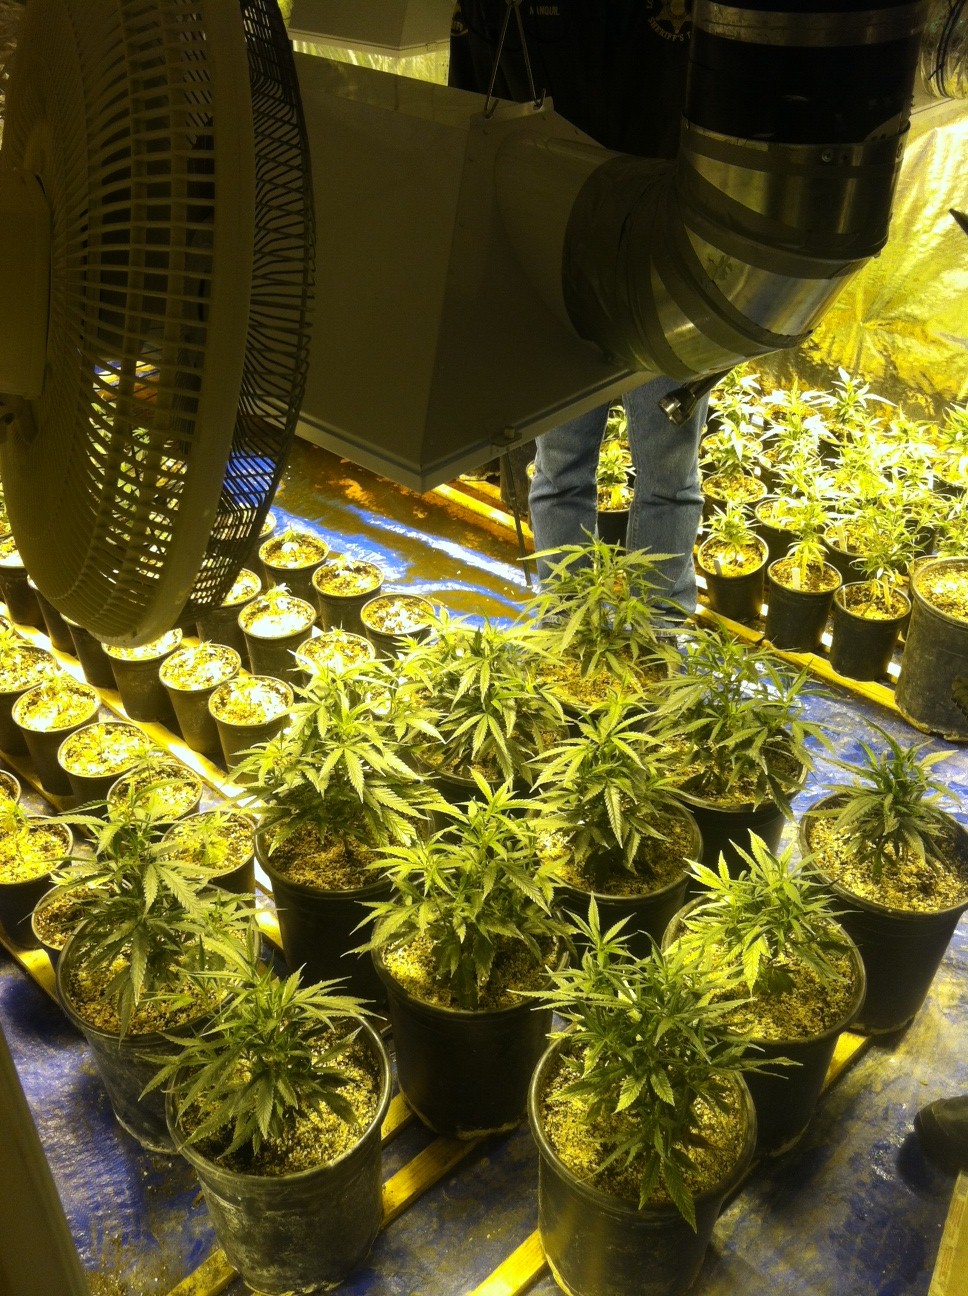 Small potted marijuana plants